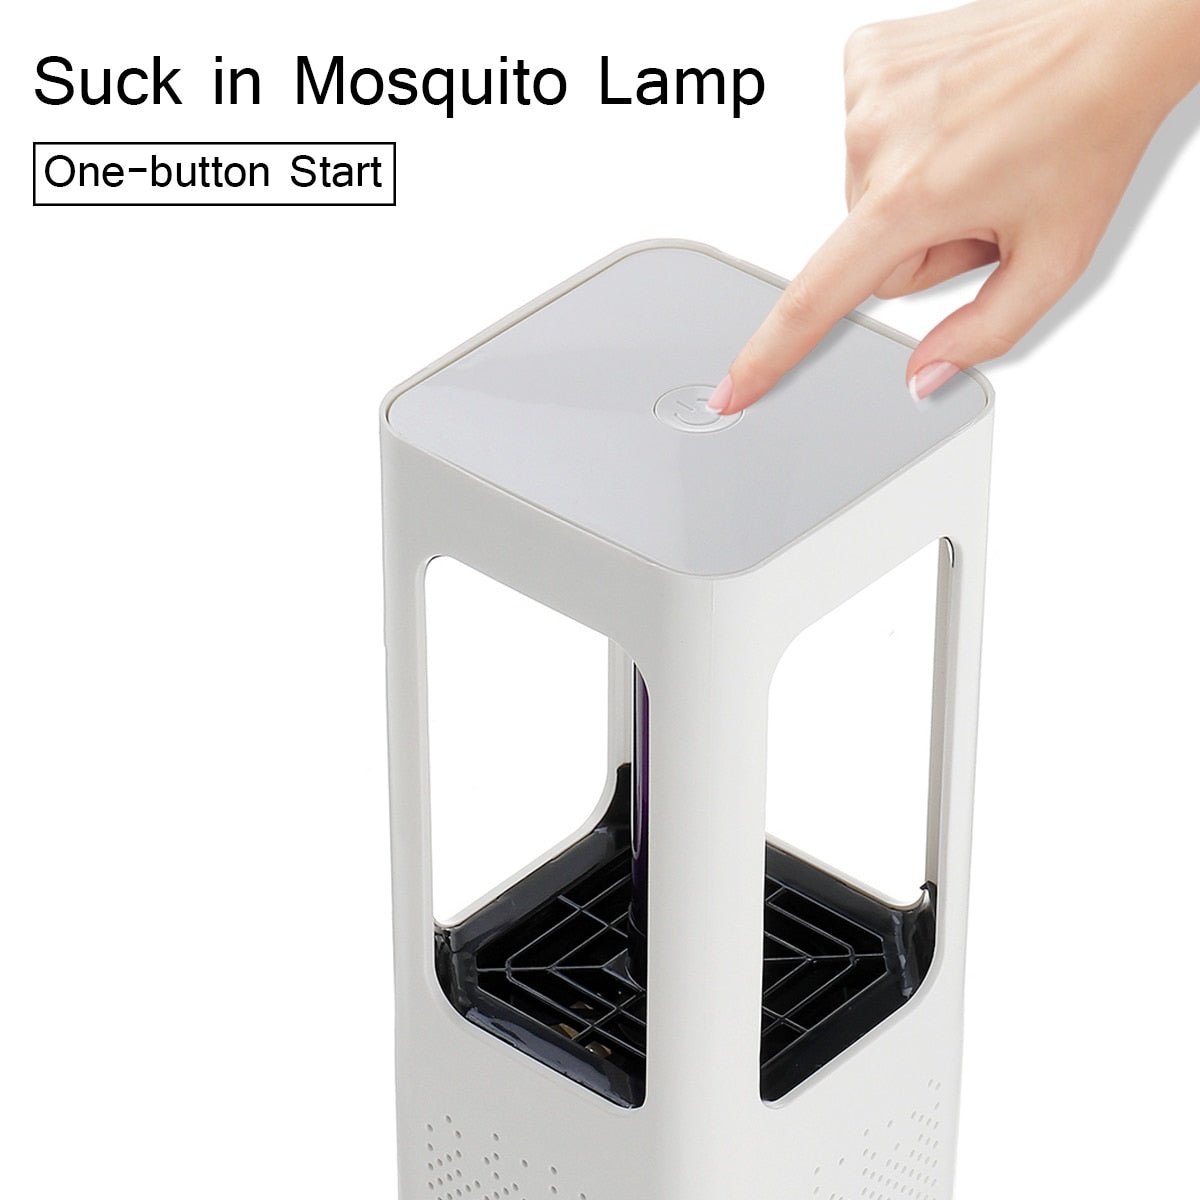 Photocatalytic Mosquito Killer Lamp